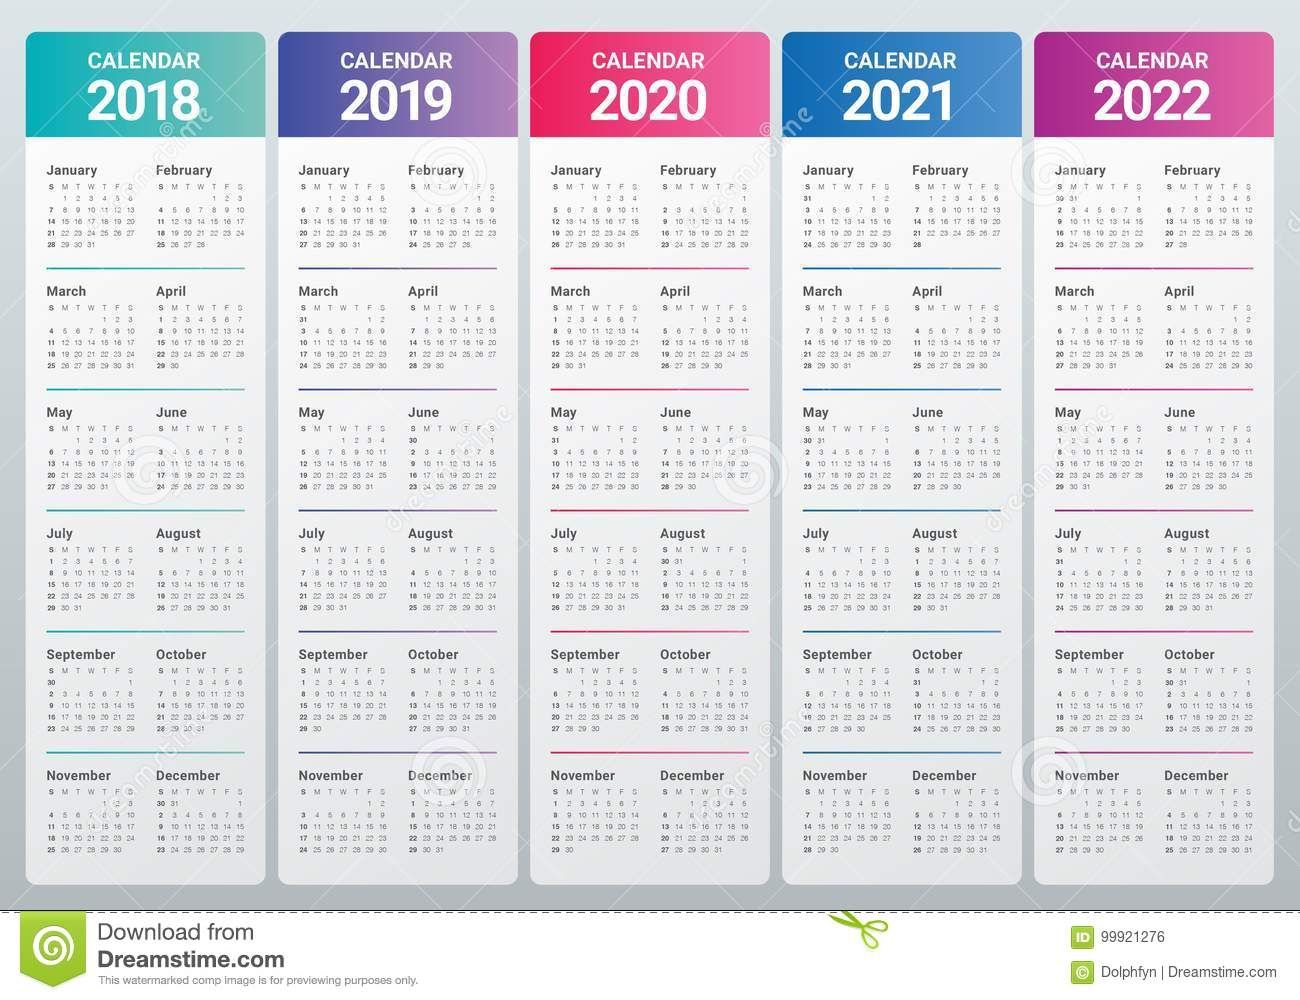 Calendar 2018 2021 Royalty Free Stock Image